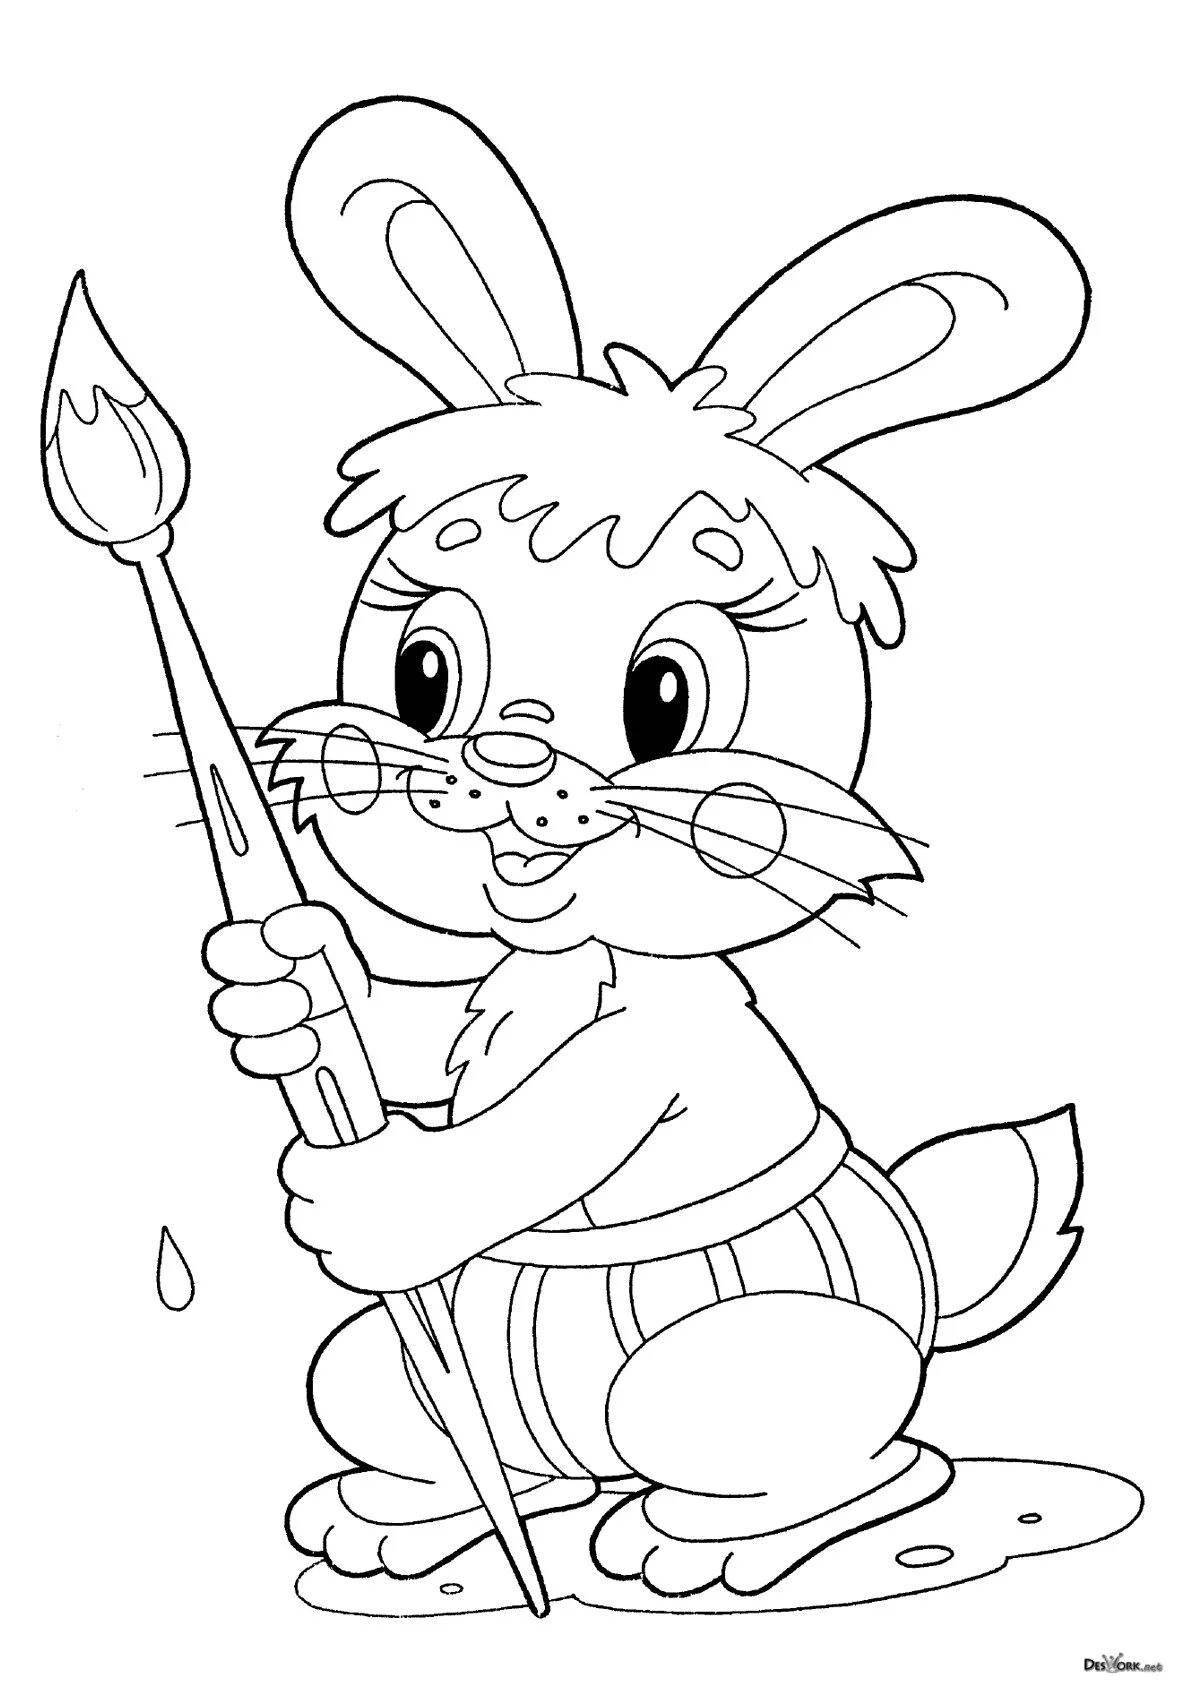 Attractive cartoon hare coloring page